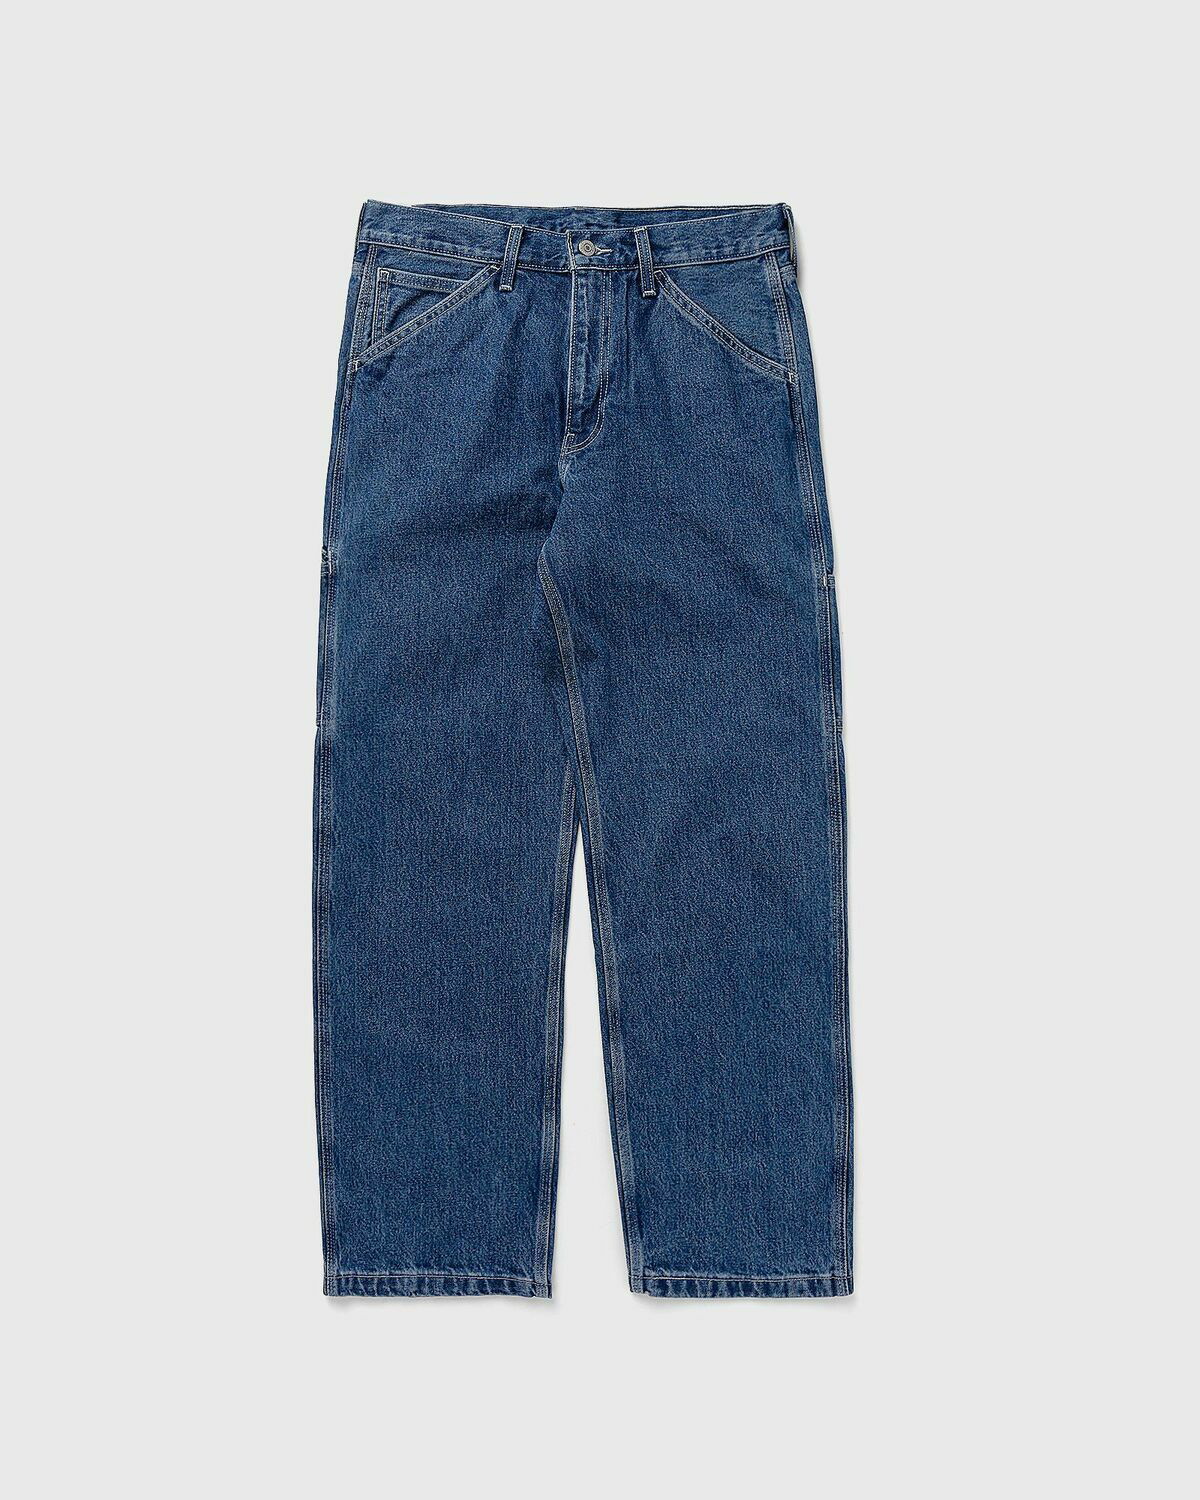 Levis 568 Stay Loose Carpenter Blue - Mens - Jeans